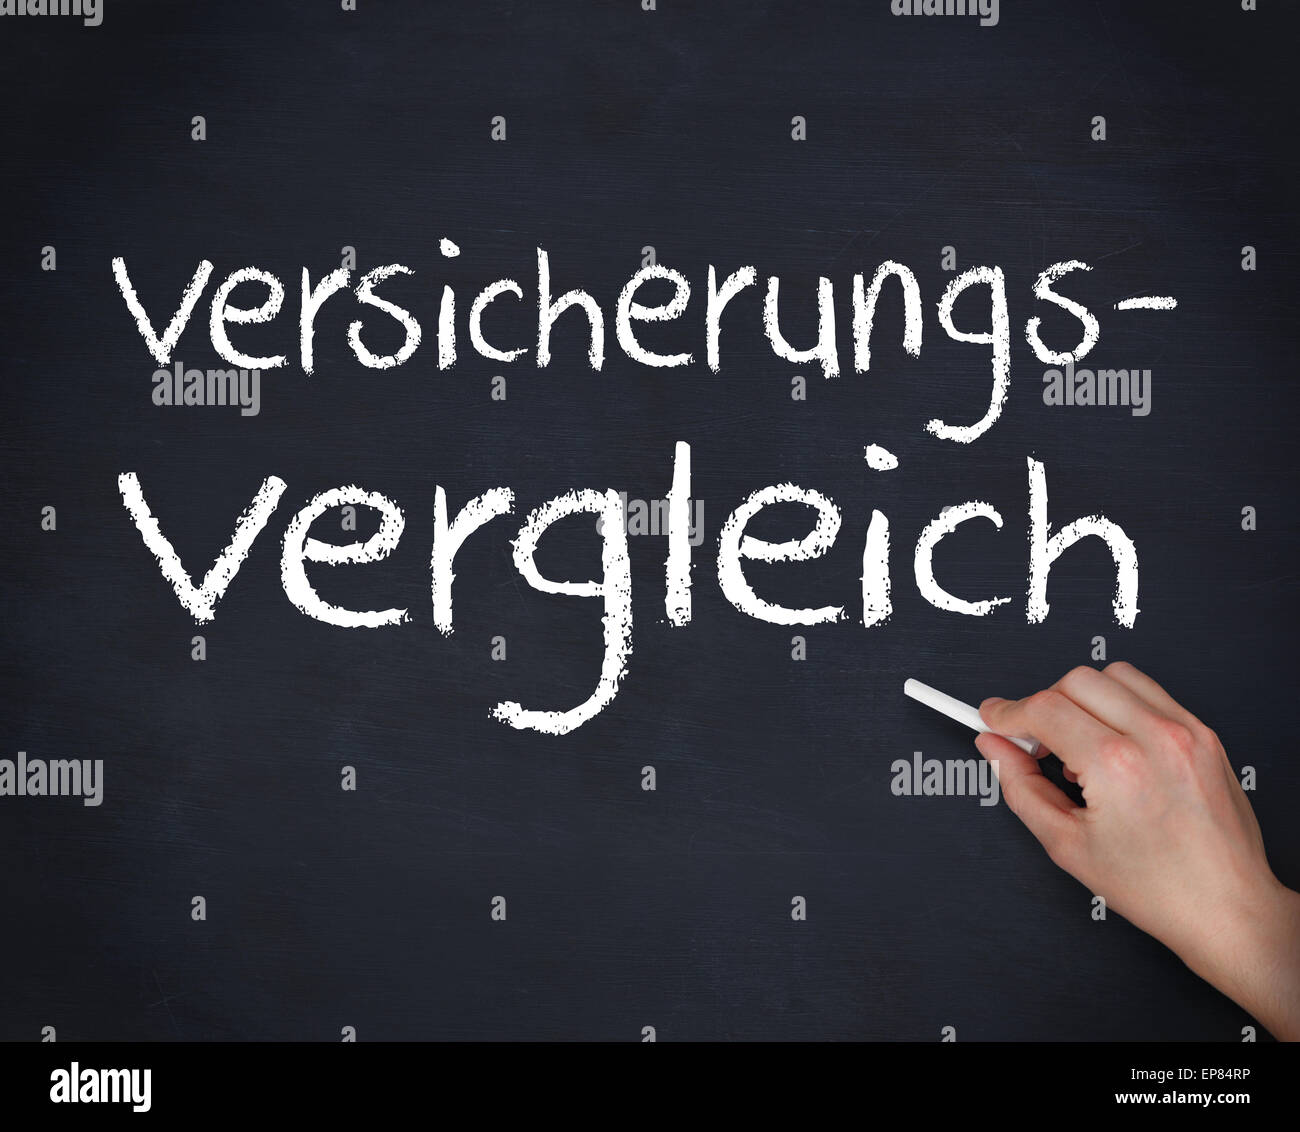 Hand writing words versicherungs and vergleich Stock Photo